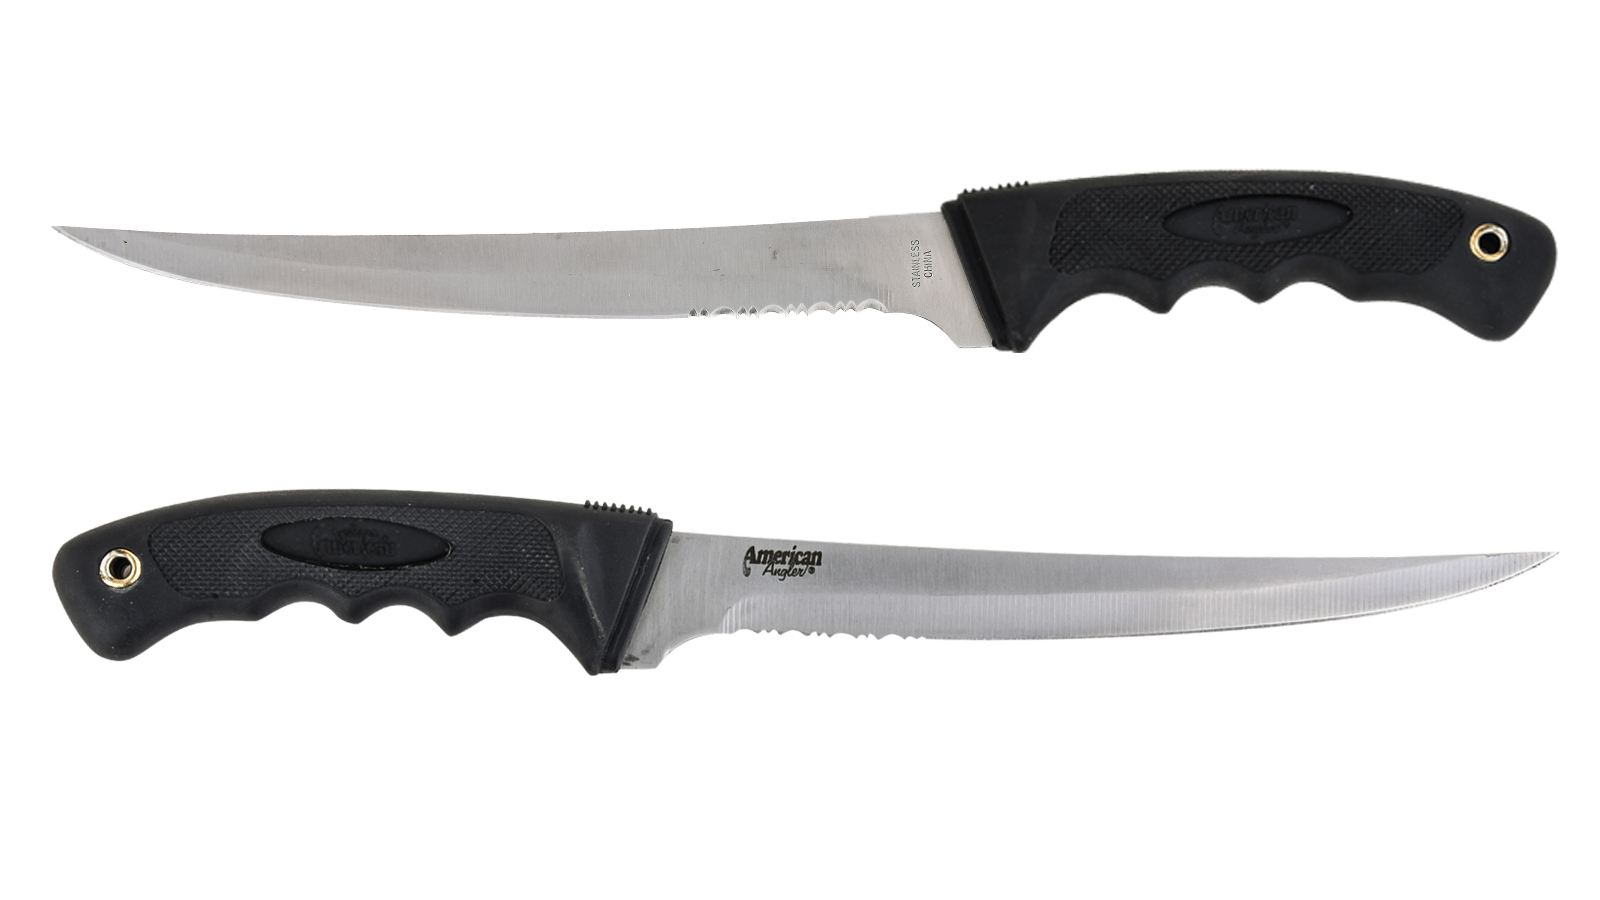 Филейный нож American Angler Fillet Knife 9". Цена - 299 рублей